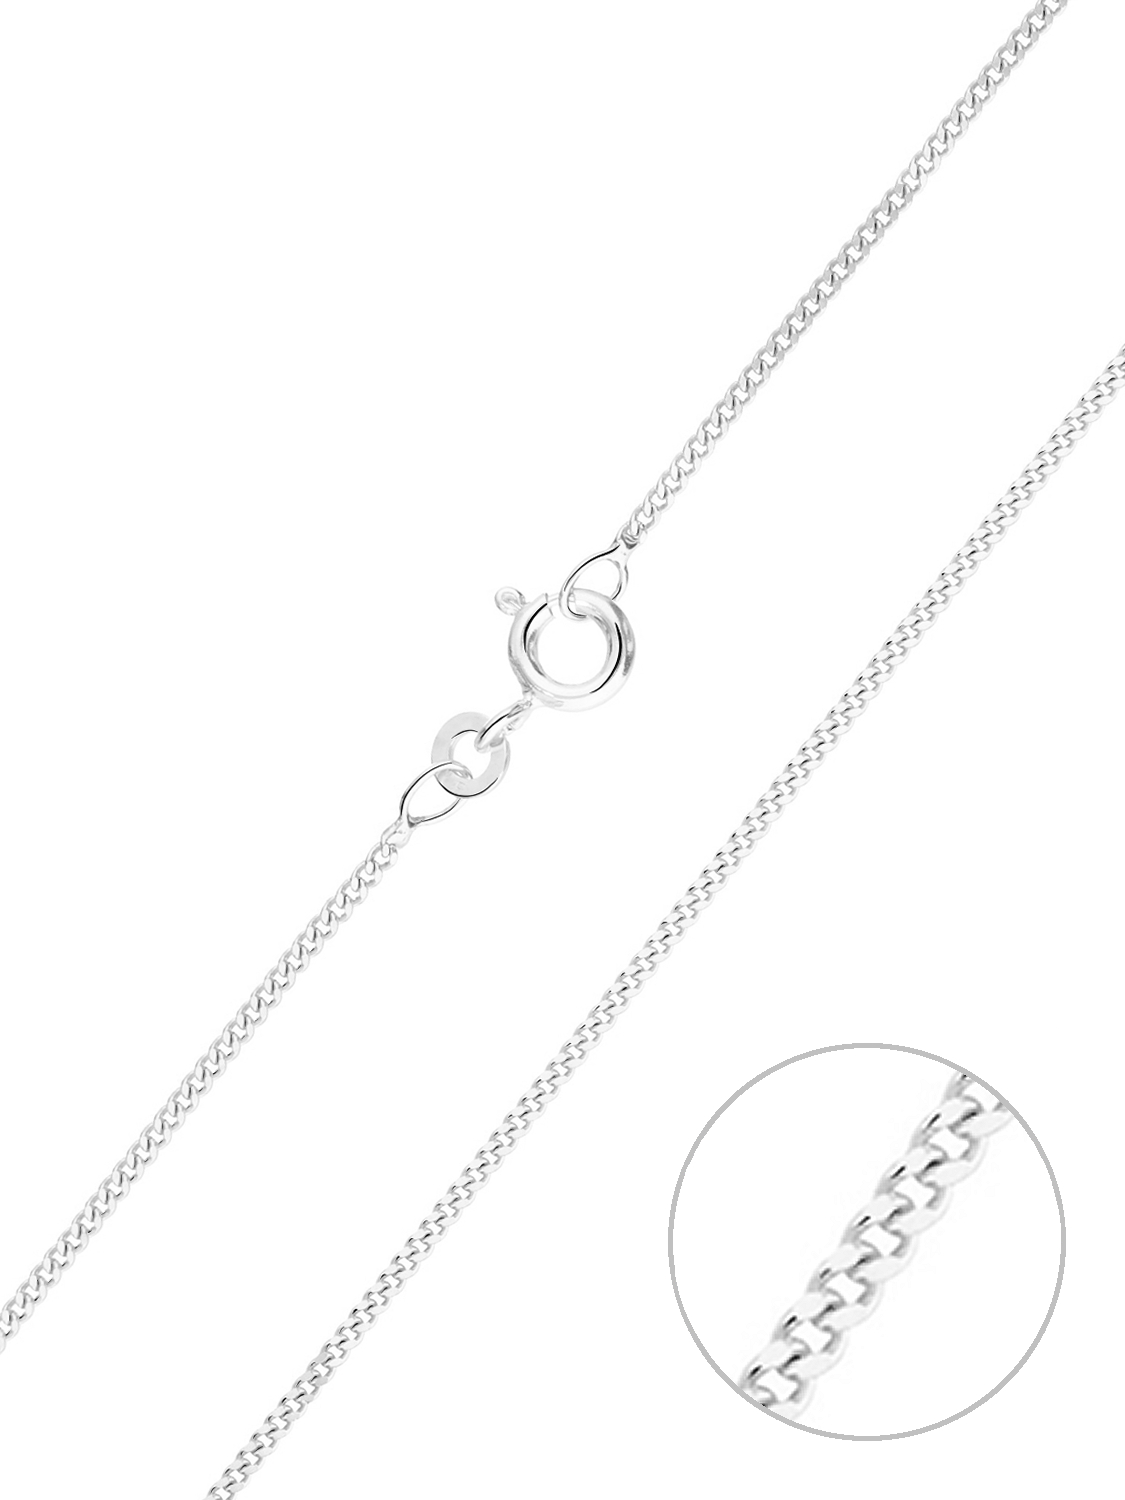 Coed - Silberkette Federring - Breite 1,4 mm - Länge 34 cm